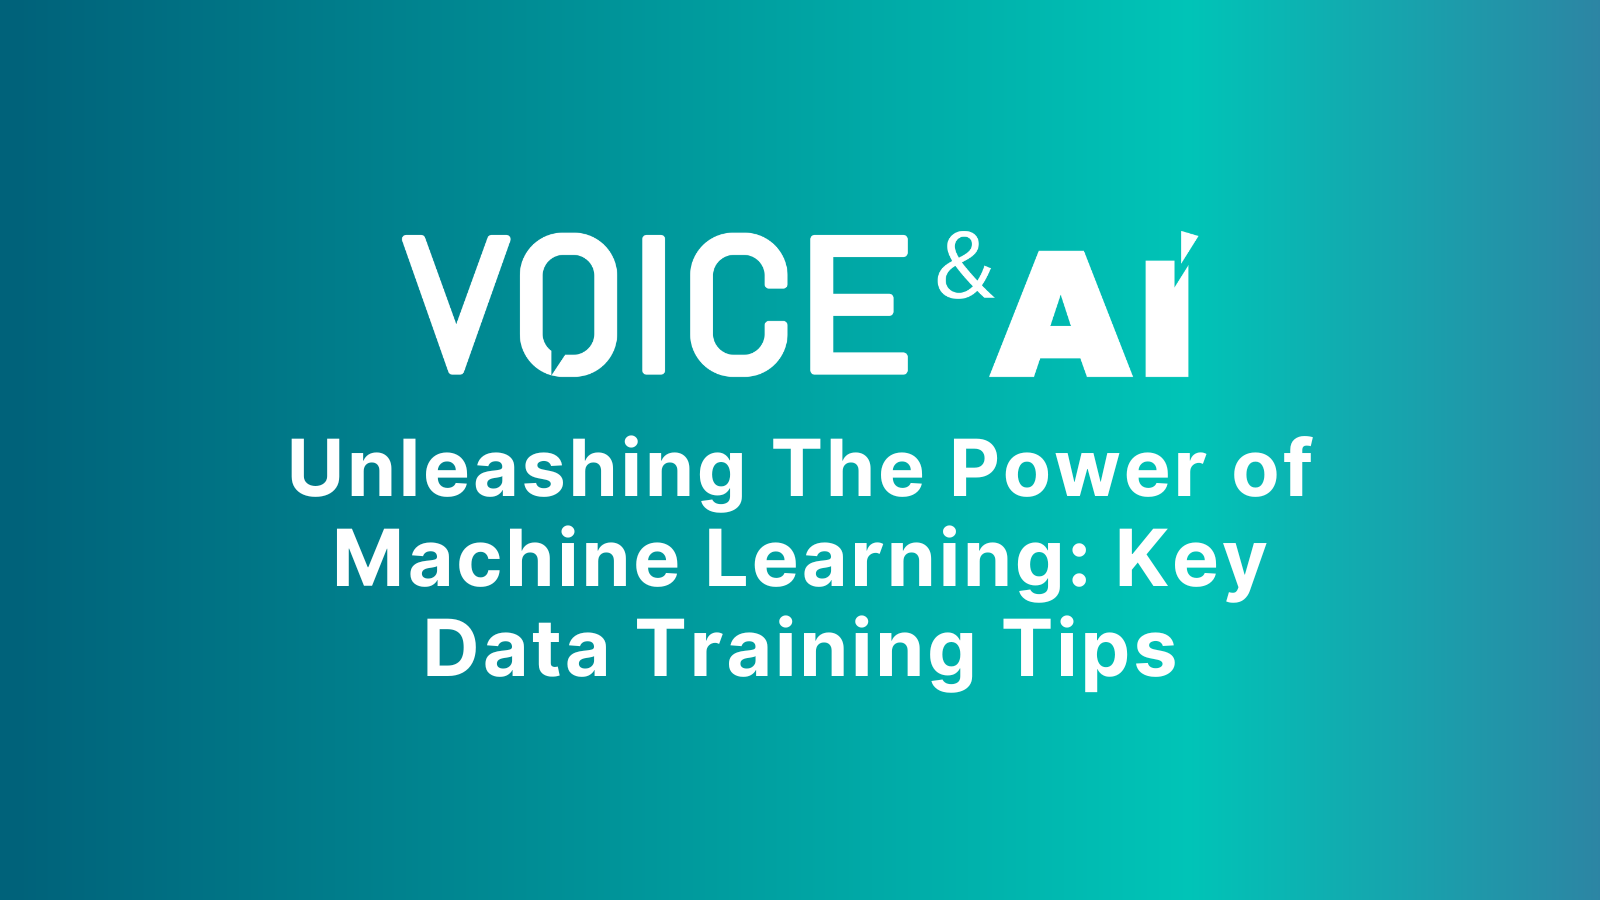 Unleashing The Power of Machine Learning: Key Data Training Tips